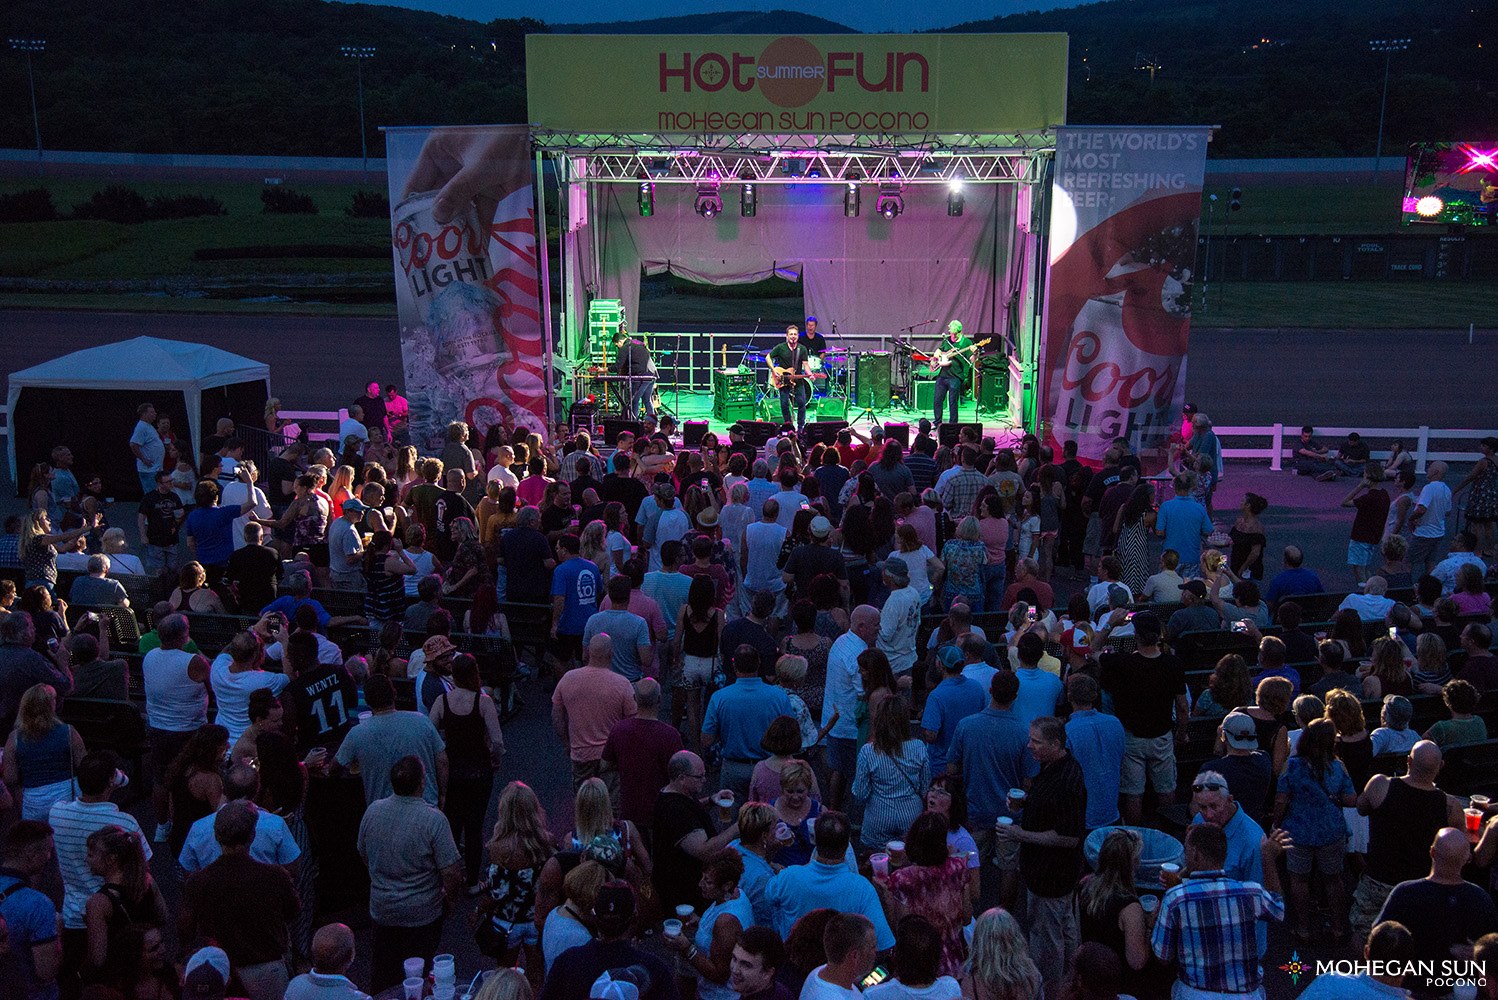 Mohegan Sun Pocono in WilkesBarre plans 'Hot Summer Fun' with